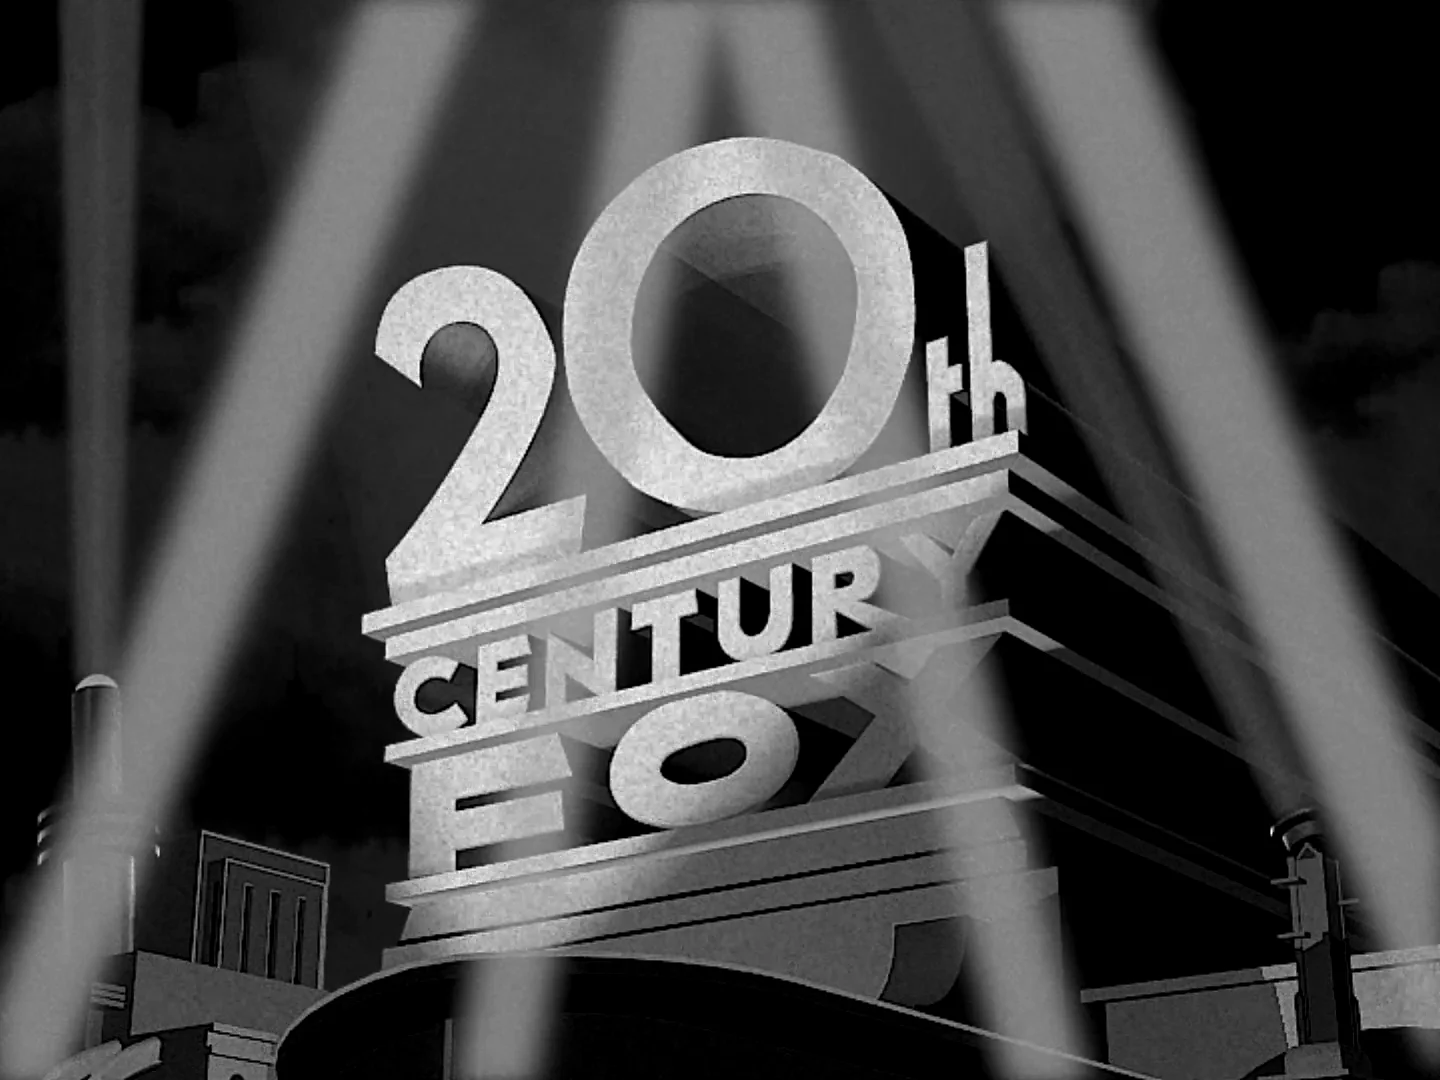 20th Century Fox (Studios) Logo Variations on Vimeo